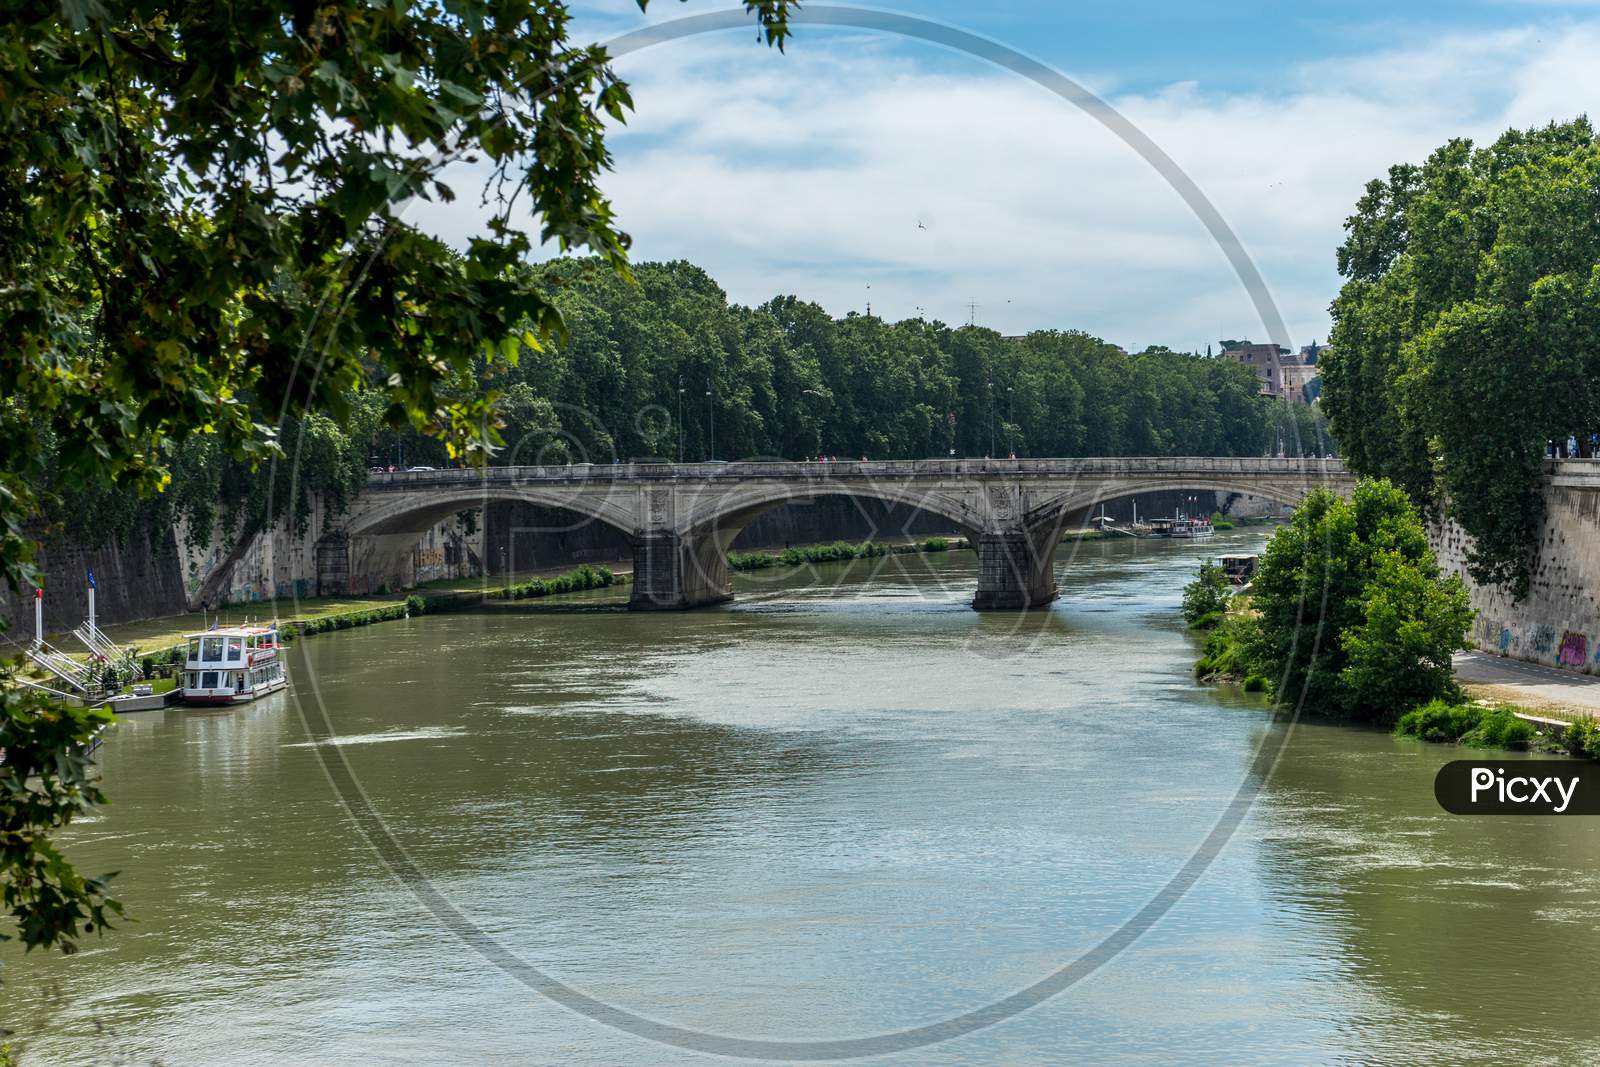 Italy, Rome, Roman Forum, A Train Crossing A Bridge Over A Body Of Water